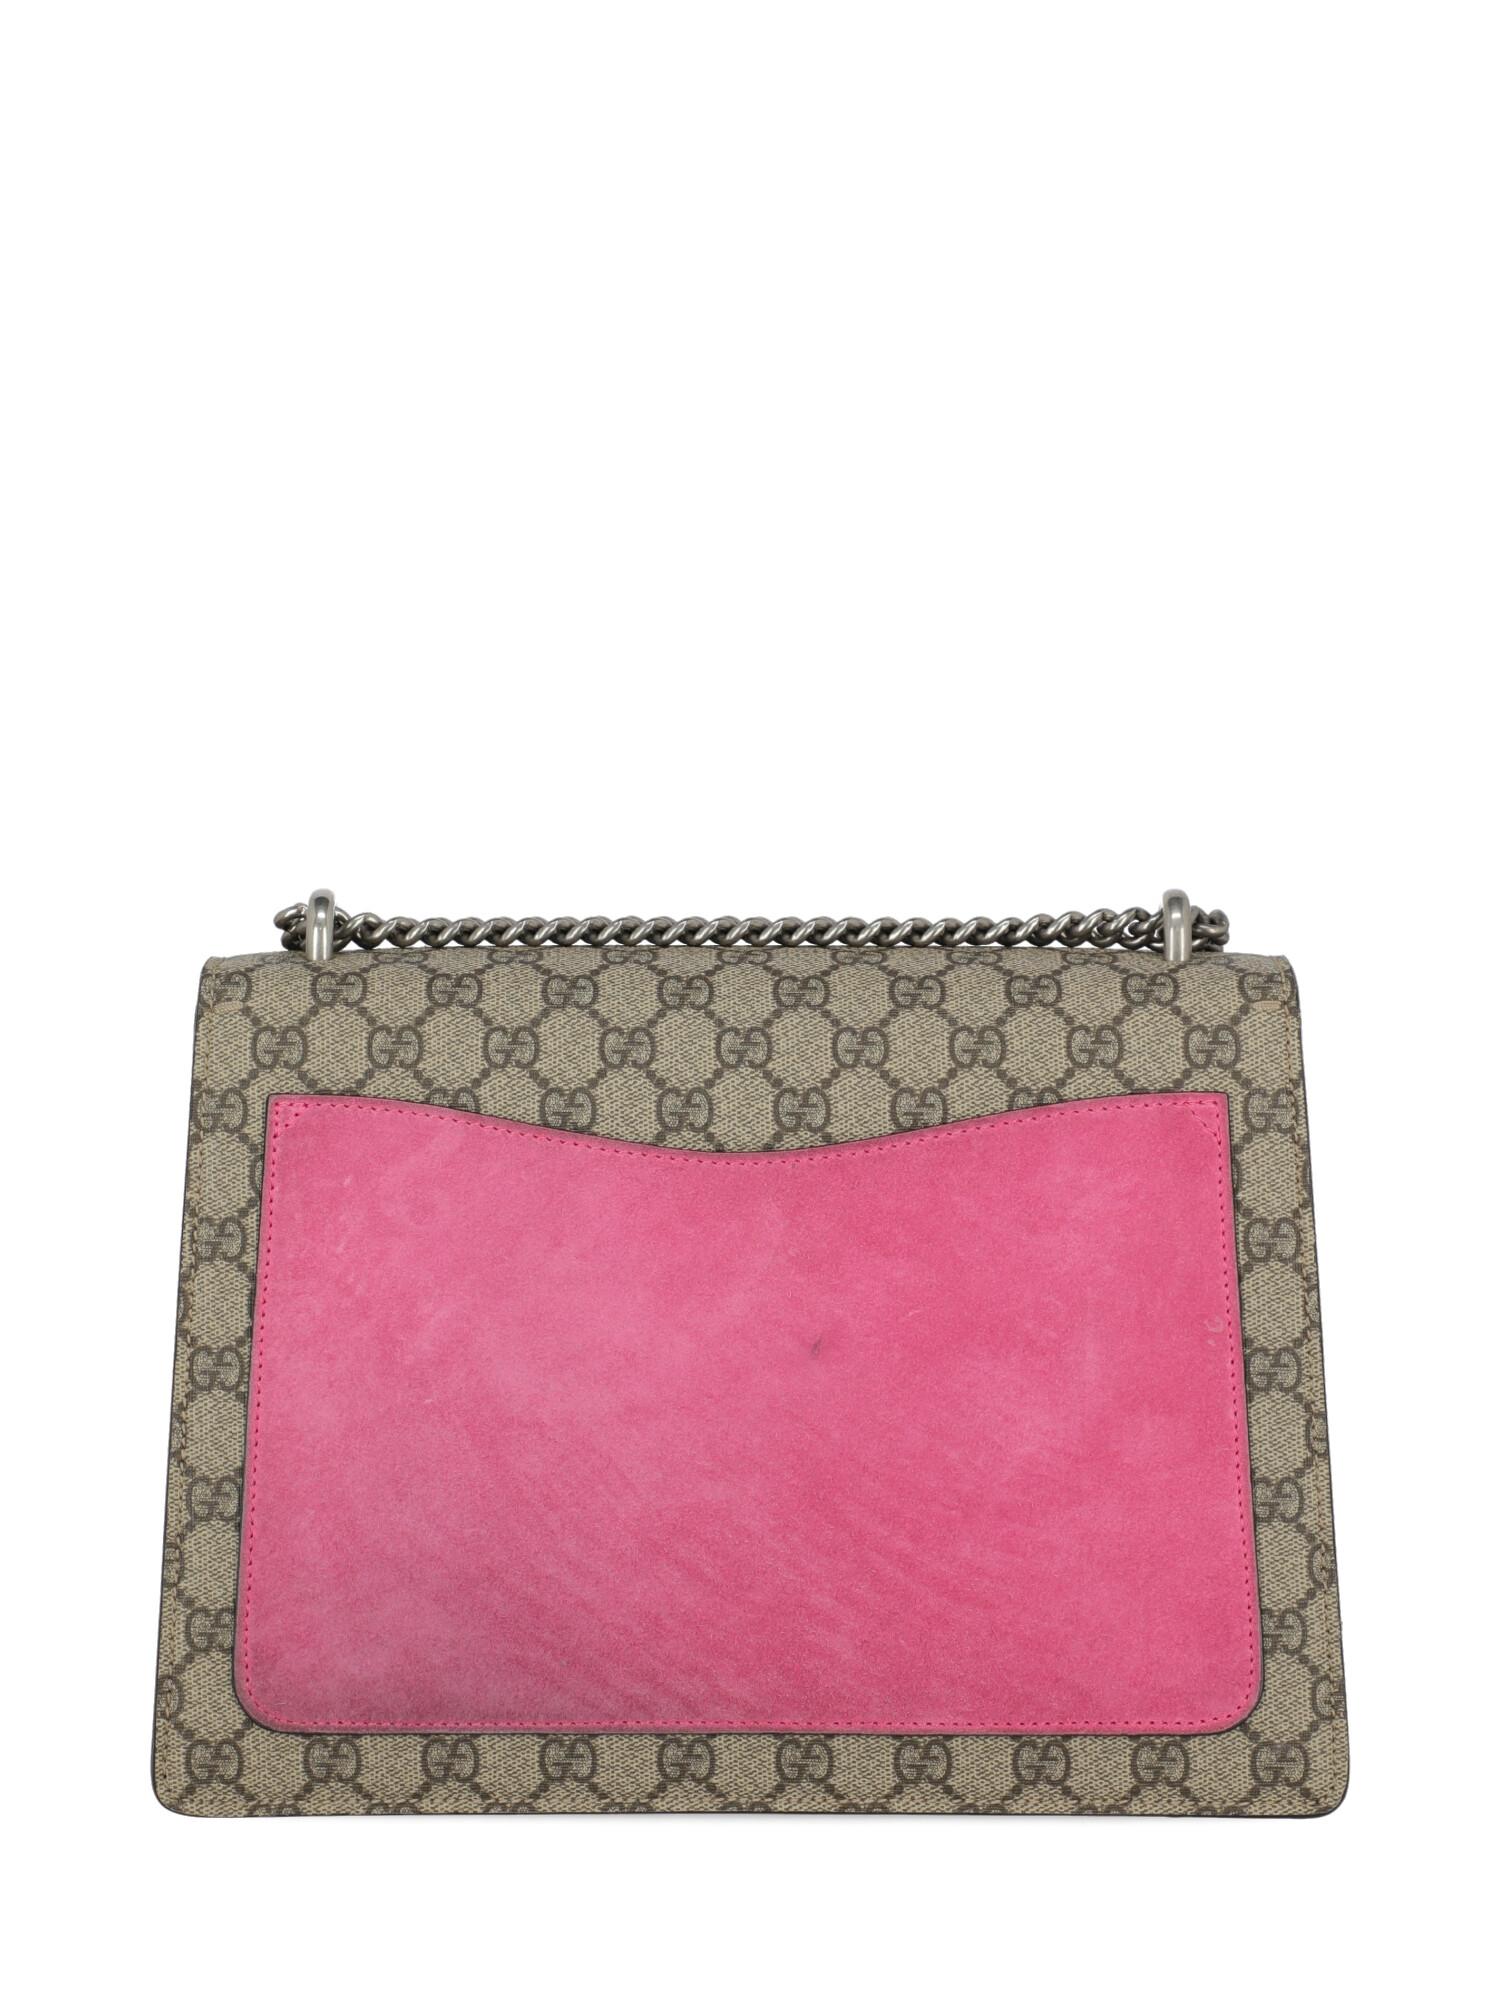 Gucci Women's Handbag Dionysus Beige/Brown Leather For Sale 1